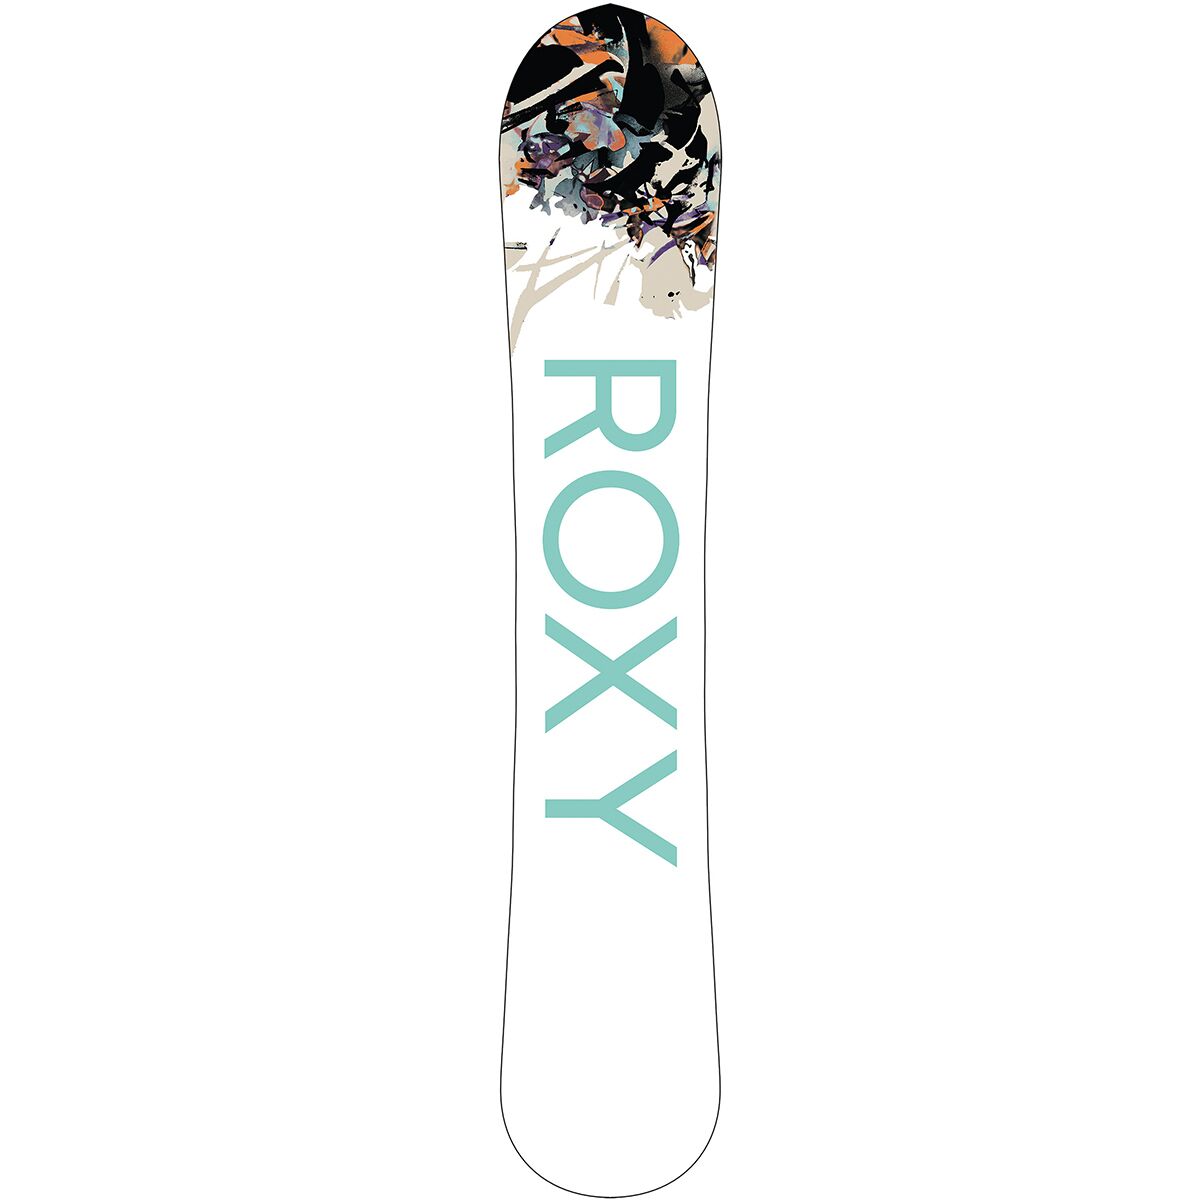 Сноуборд Smoothie - 2022 год Roxy